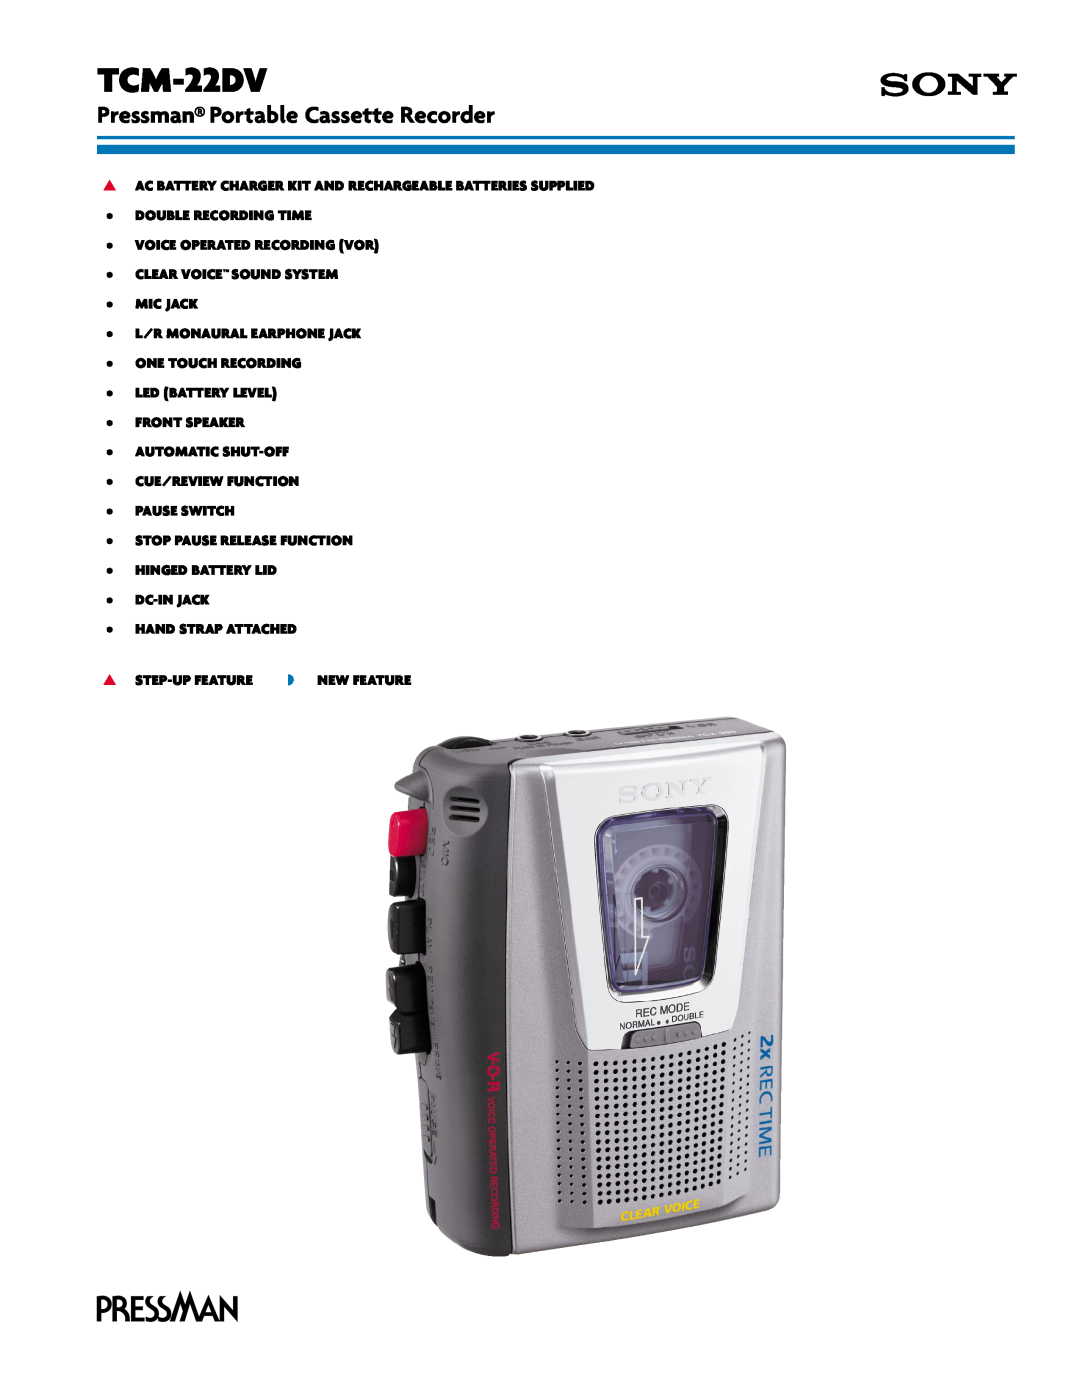 Sony TCM-22DV manual Pressman Portable Cassette Recorder 